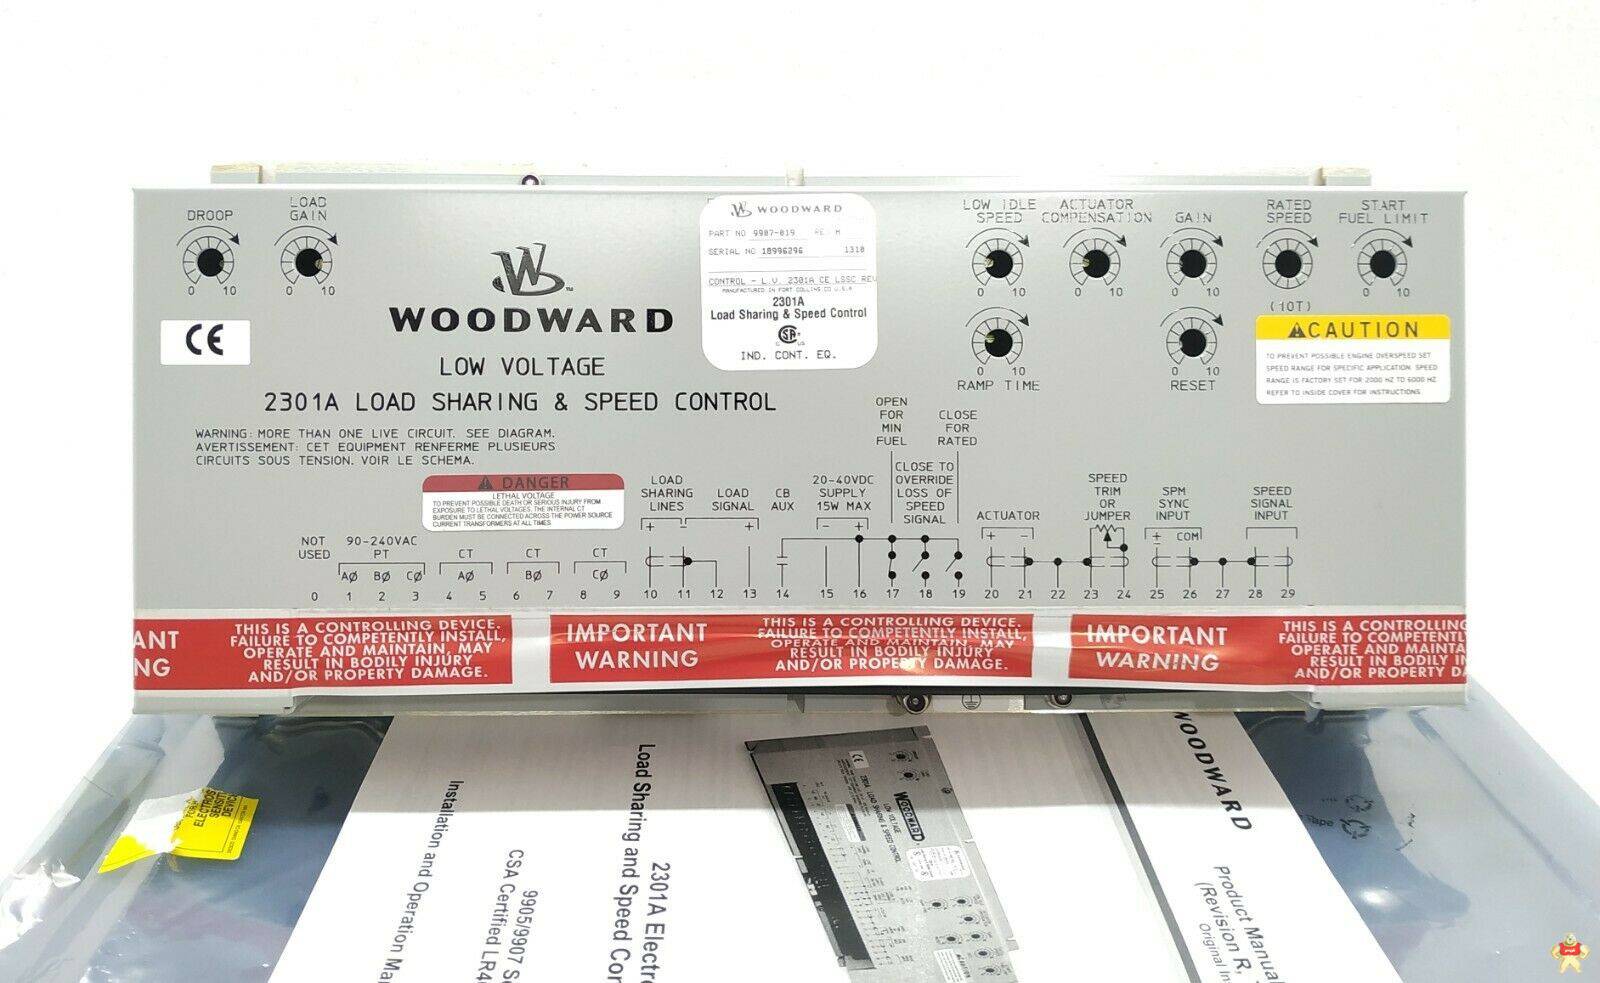 WOODWARD 8200-203伍德沃德船舶备件供应 全新原装,库存现货,质保一年